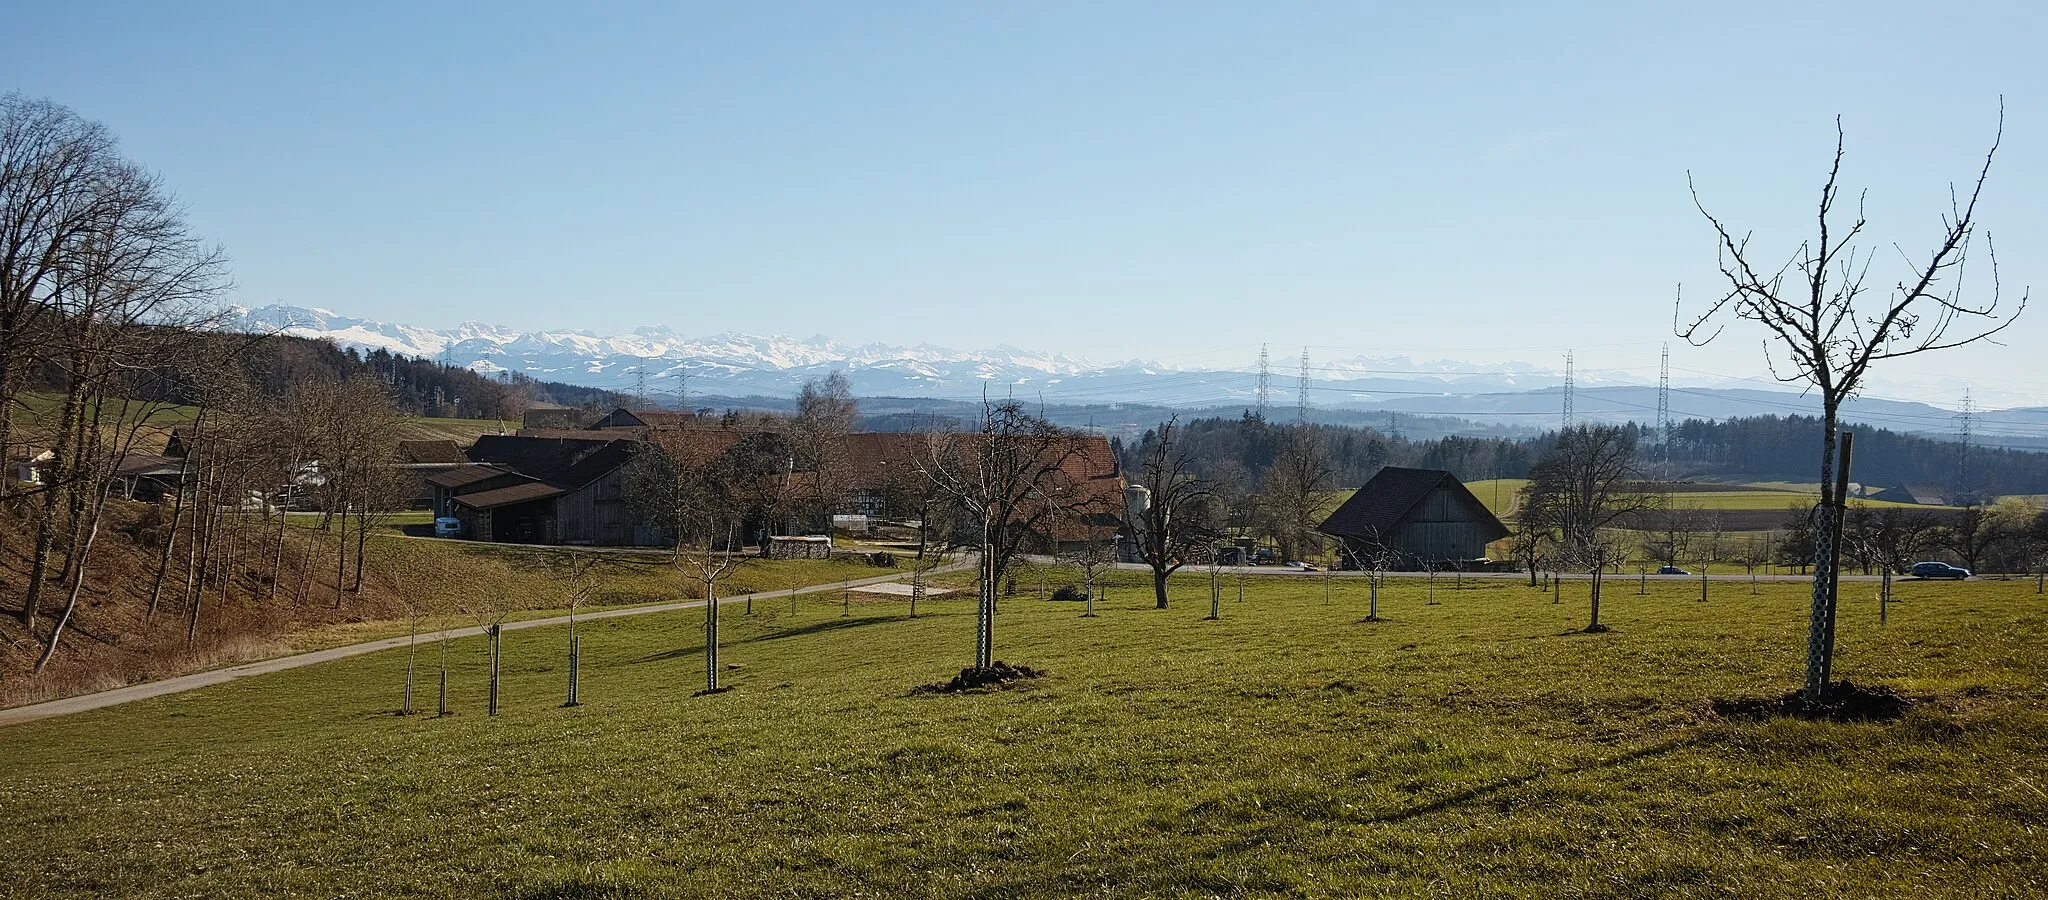 Photo showing: Agasul, hamlet in the municipality of Illnau-Effretikon, canton of Zürich, Switzerland. Panoramic view.